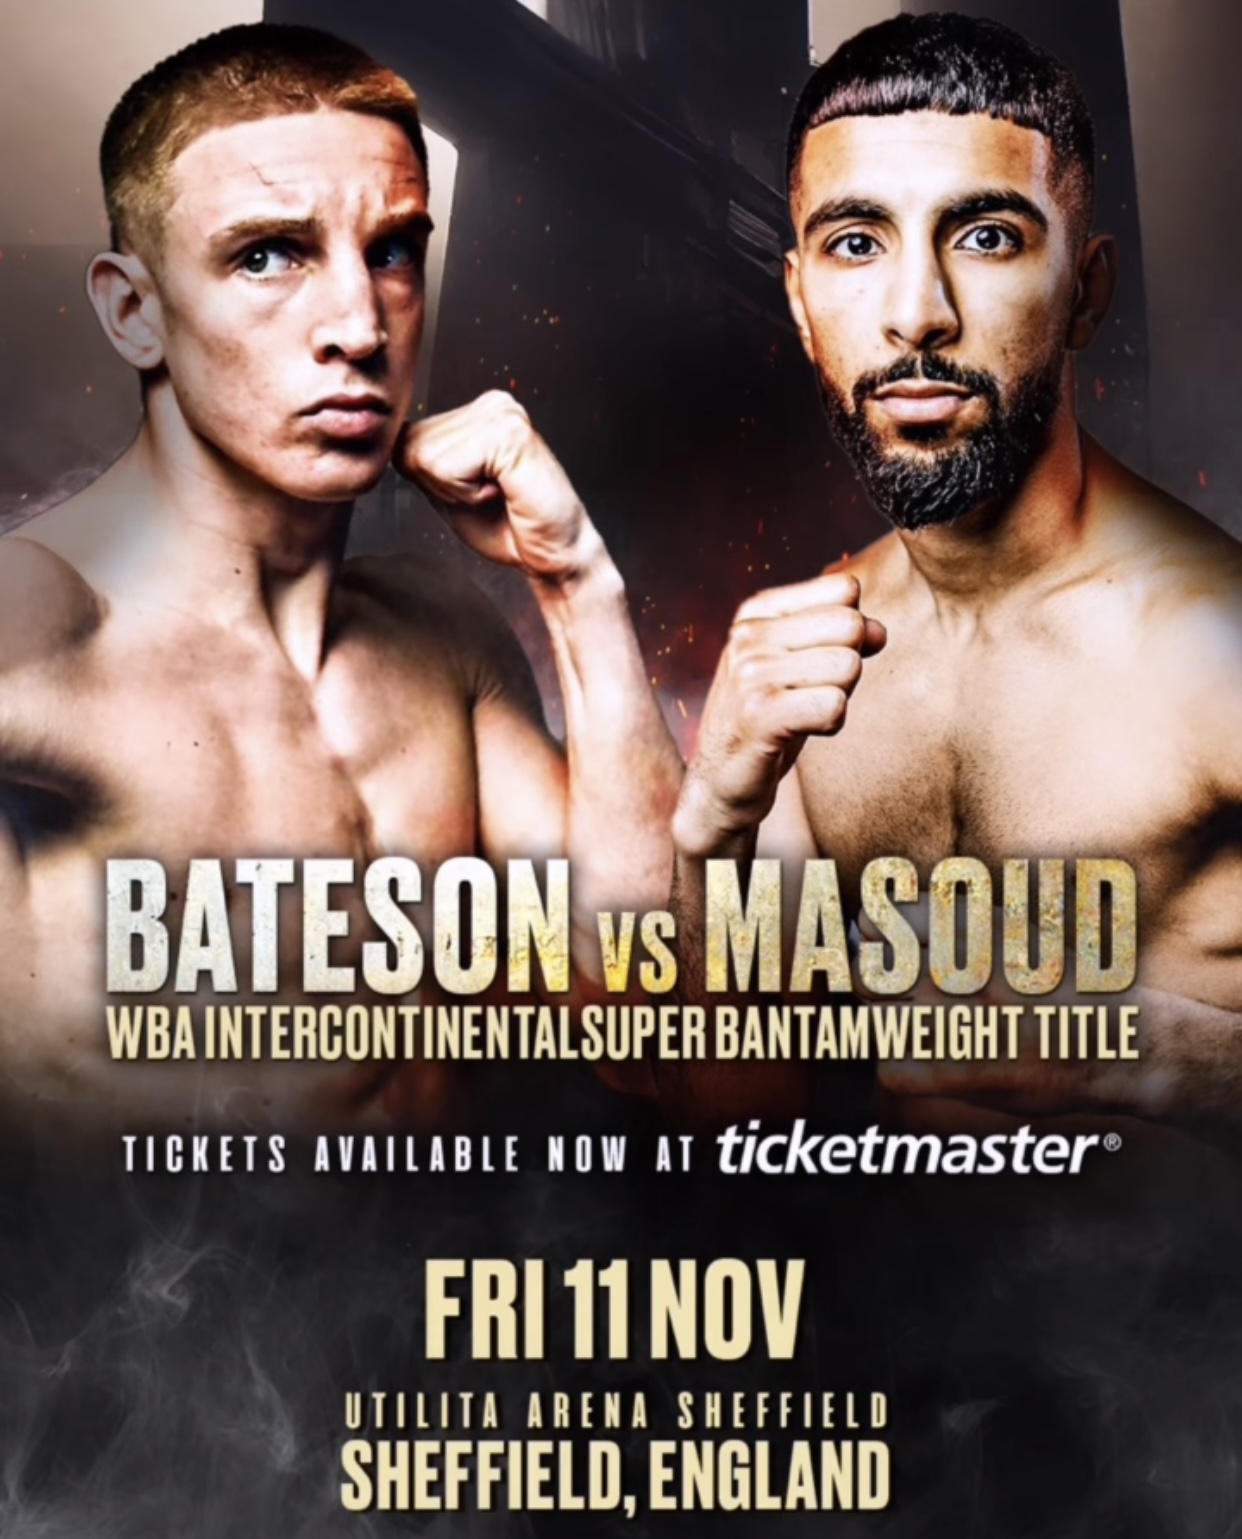 Bateson meets Masoud to defend his WBA Intercontinental title